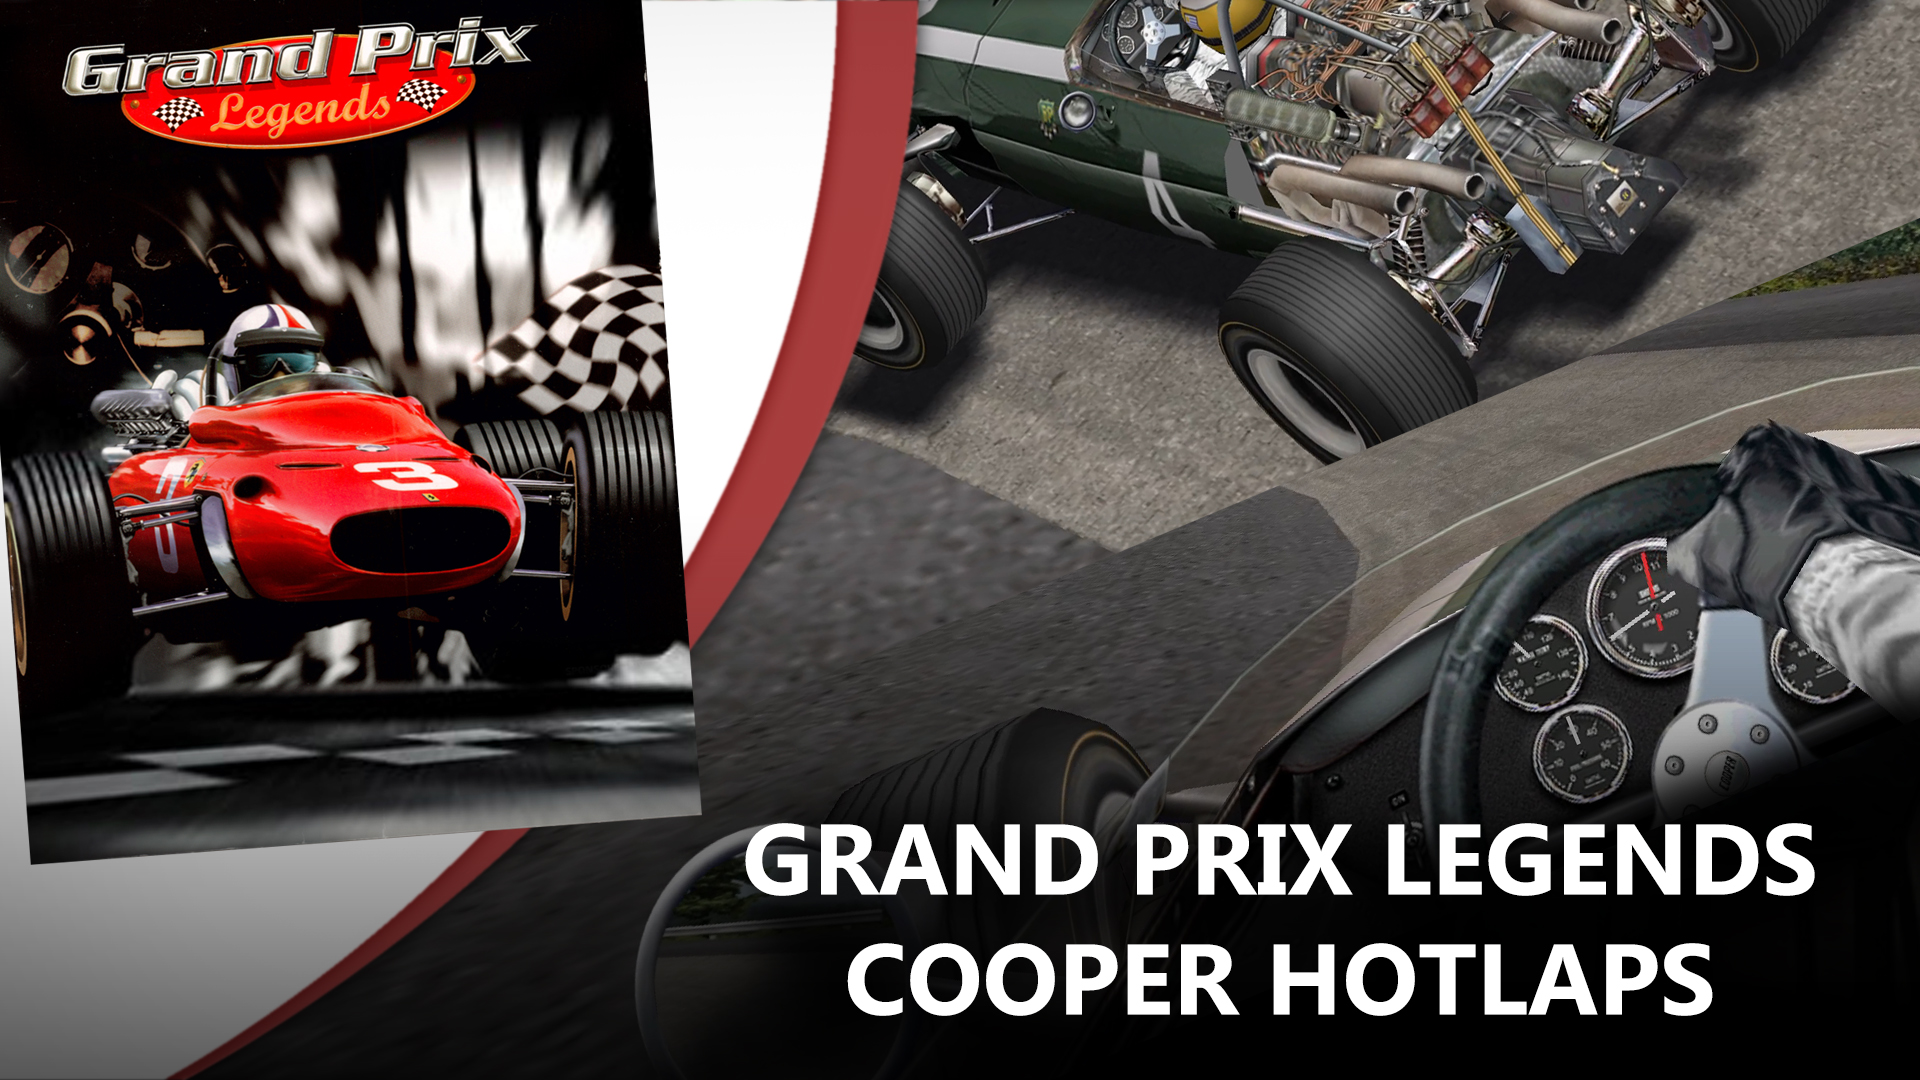 Fast laps in the Coventry / Cooper in Grand Prix Legends (1998)